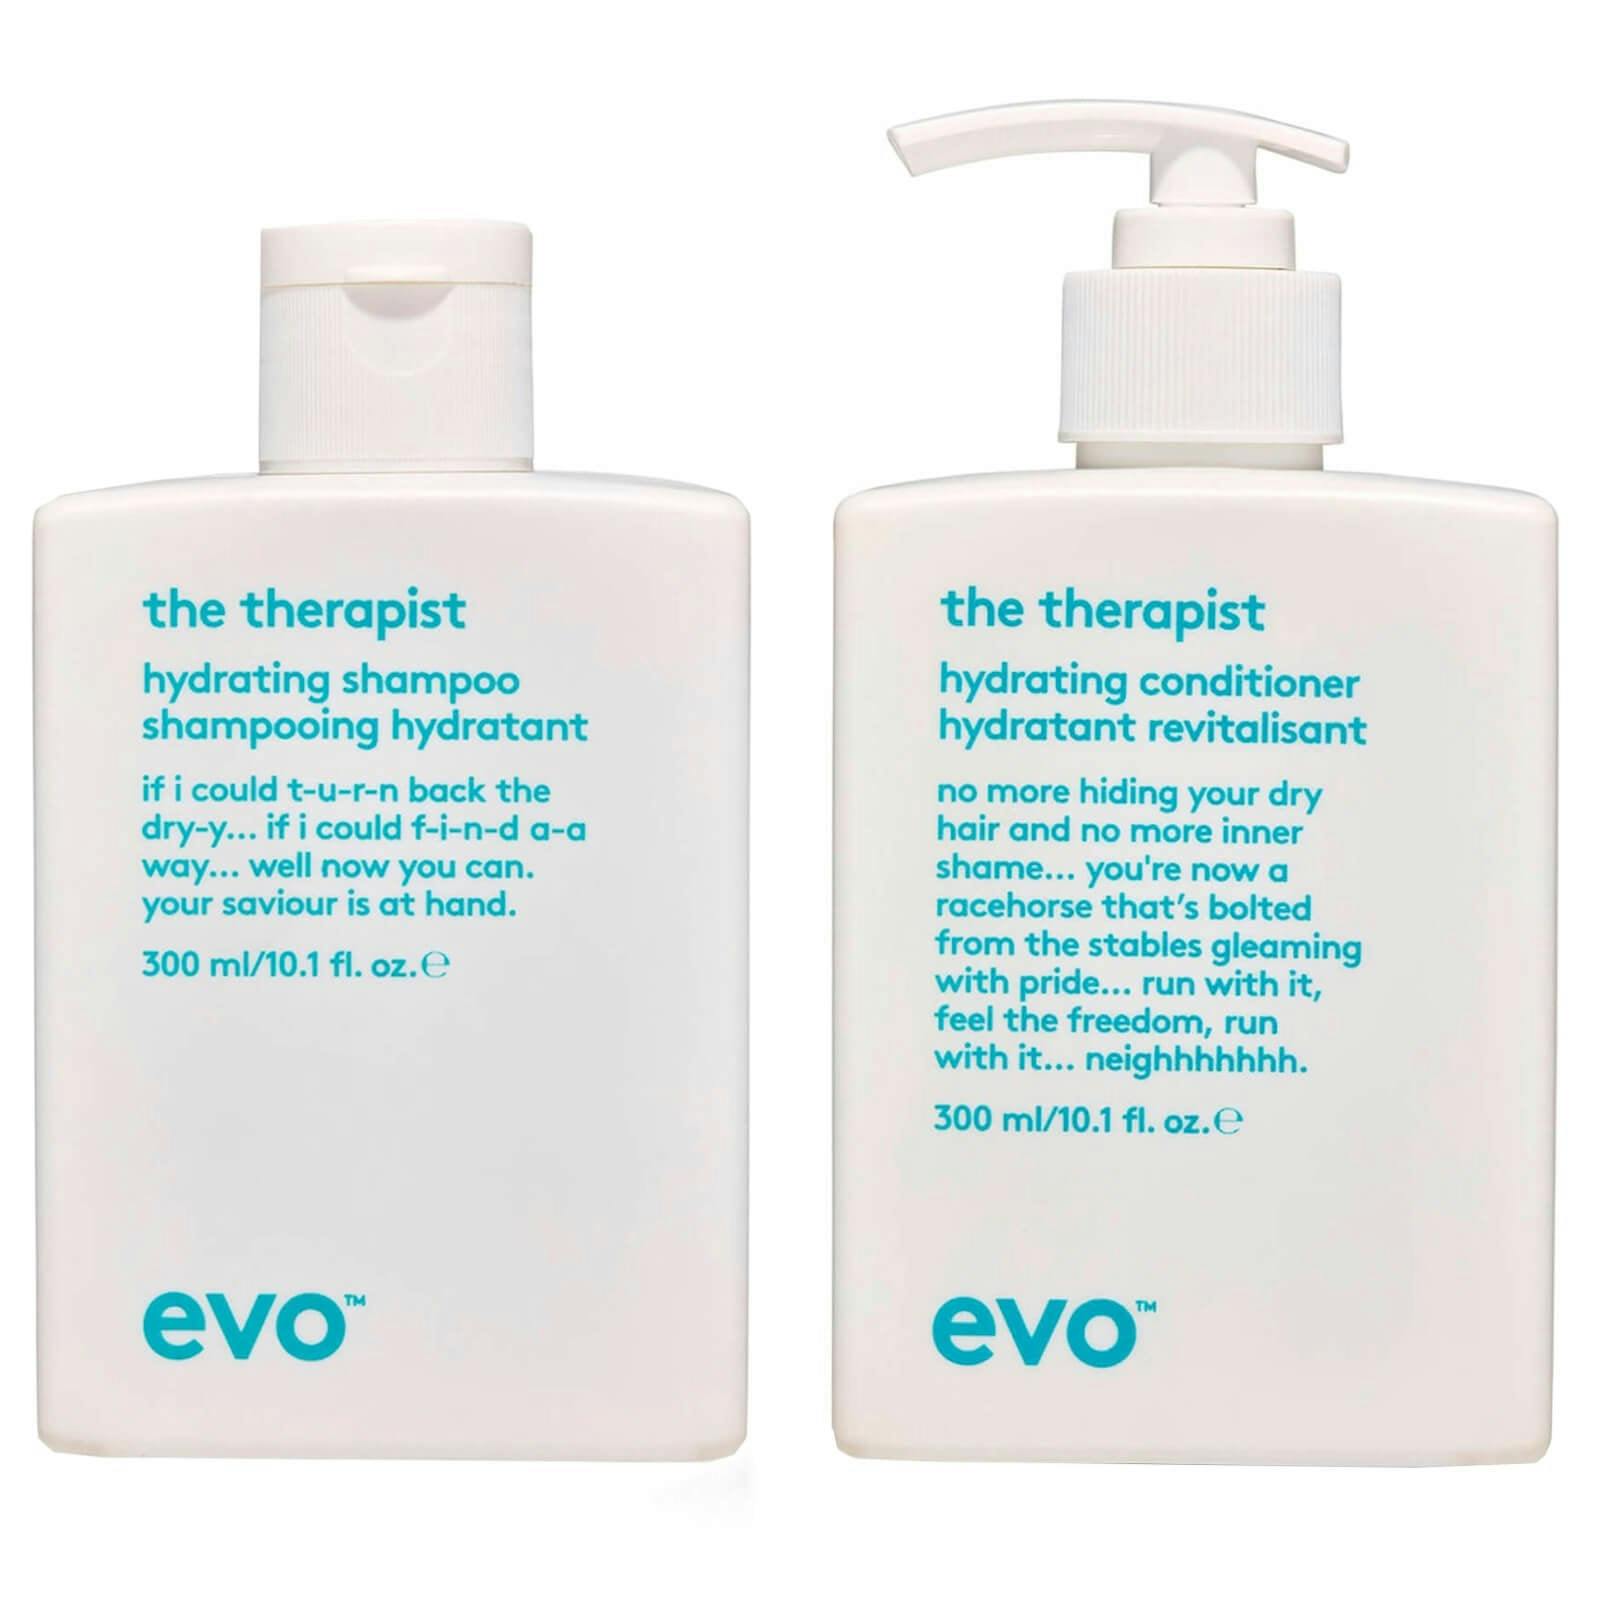 Evo The Therapist Hydrating Shampoo and Conditioner 300ml Bundle